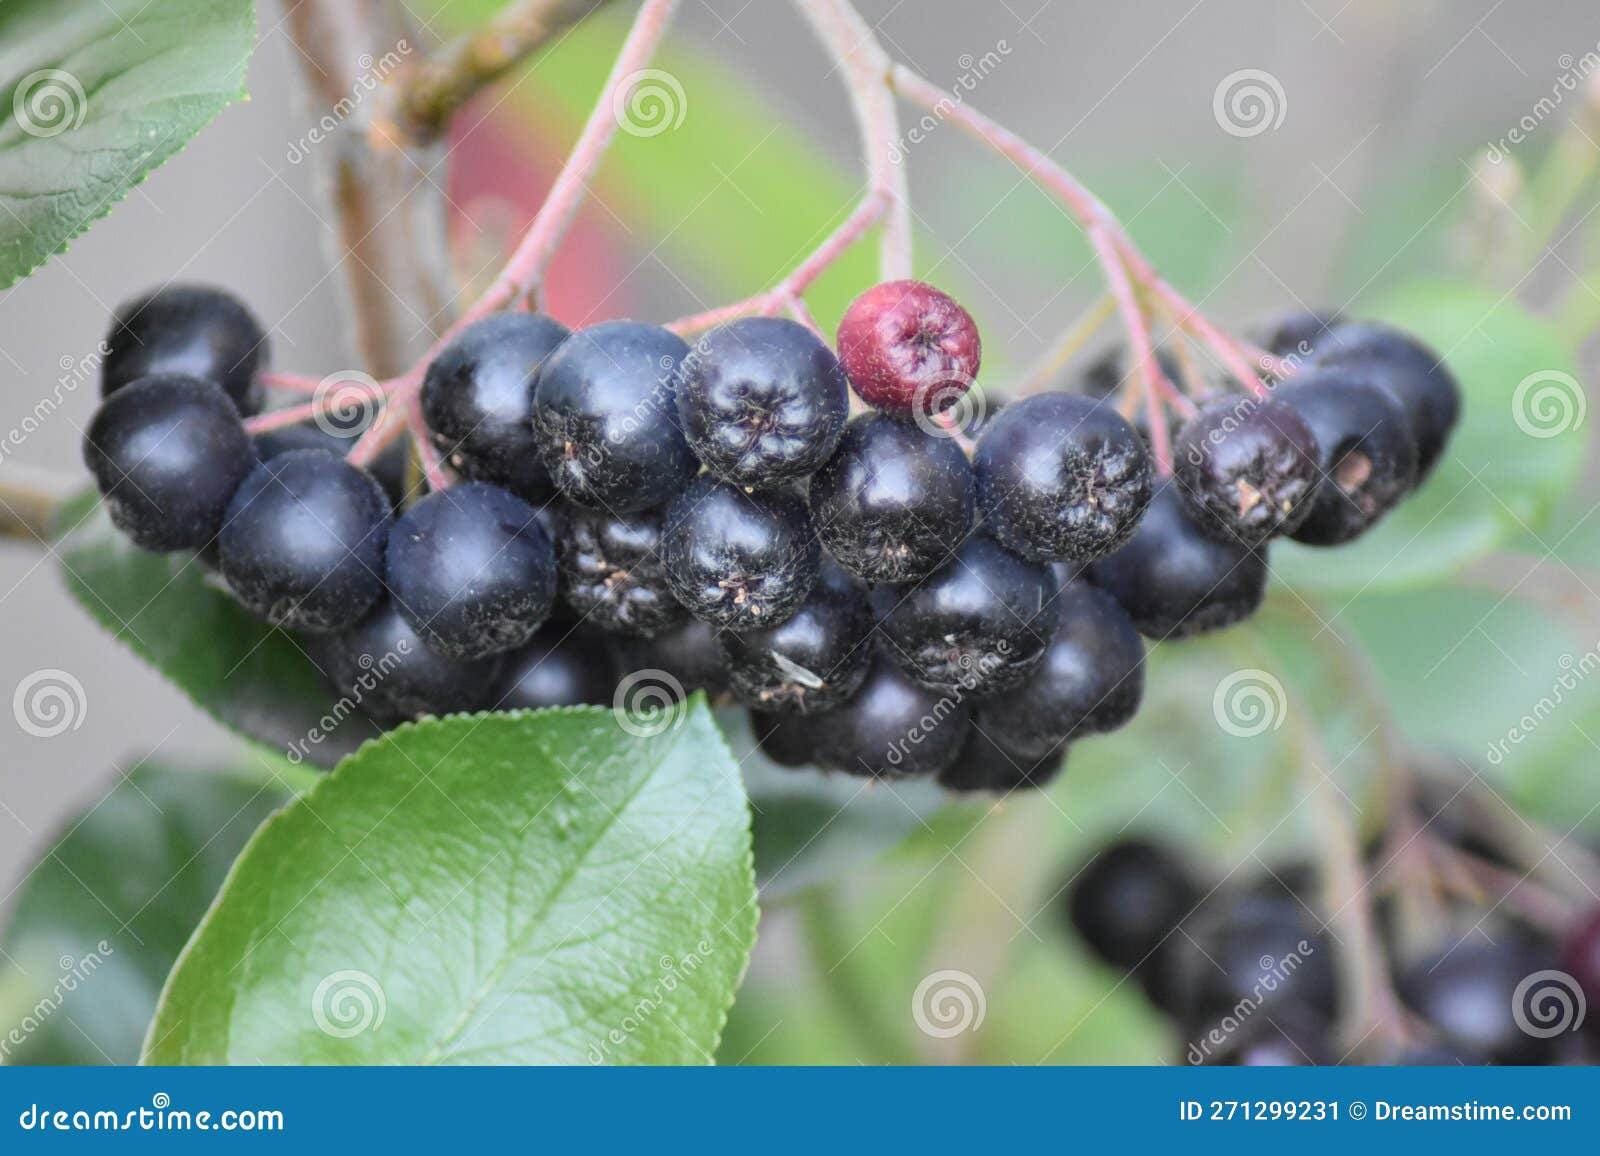 unripe berries of an aronia prunifolia nero